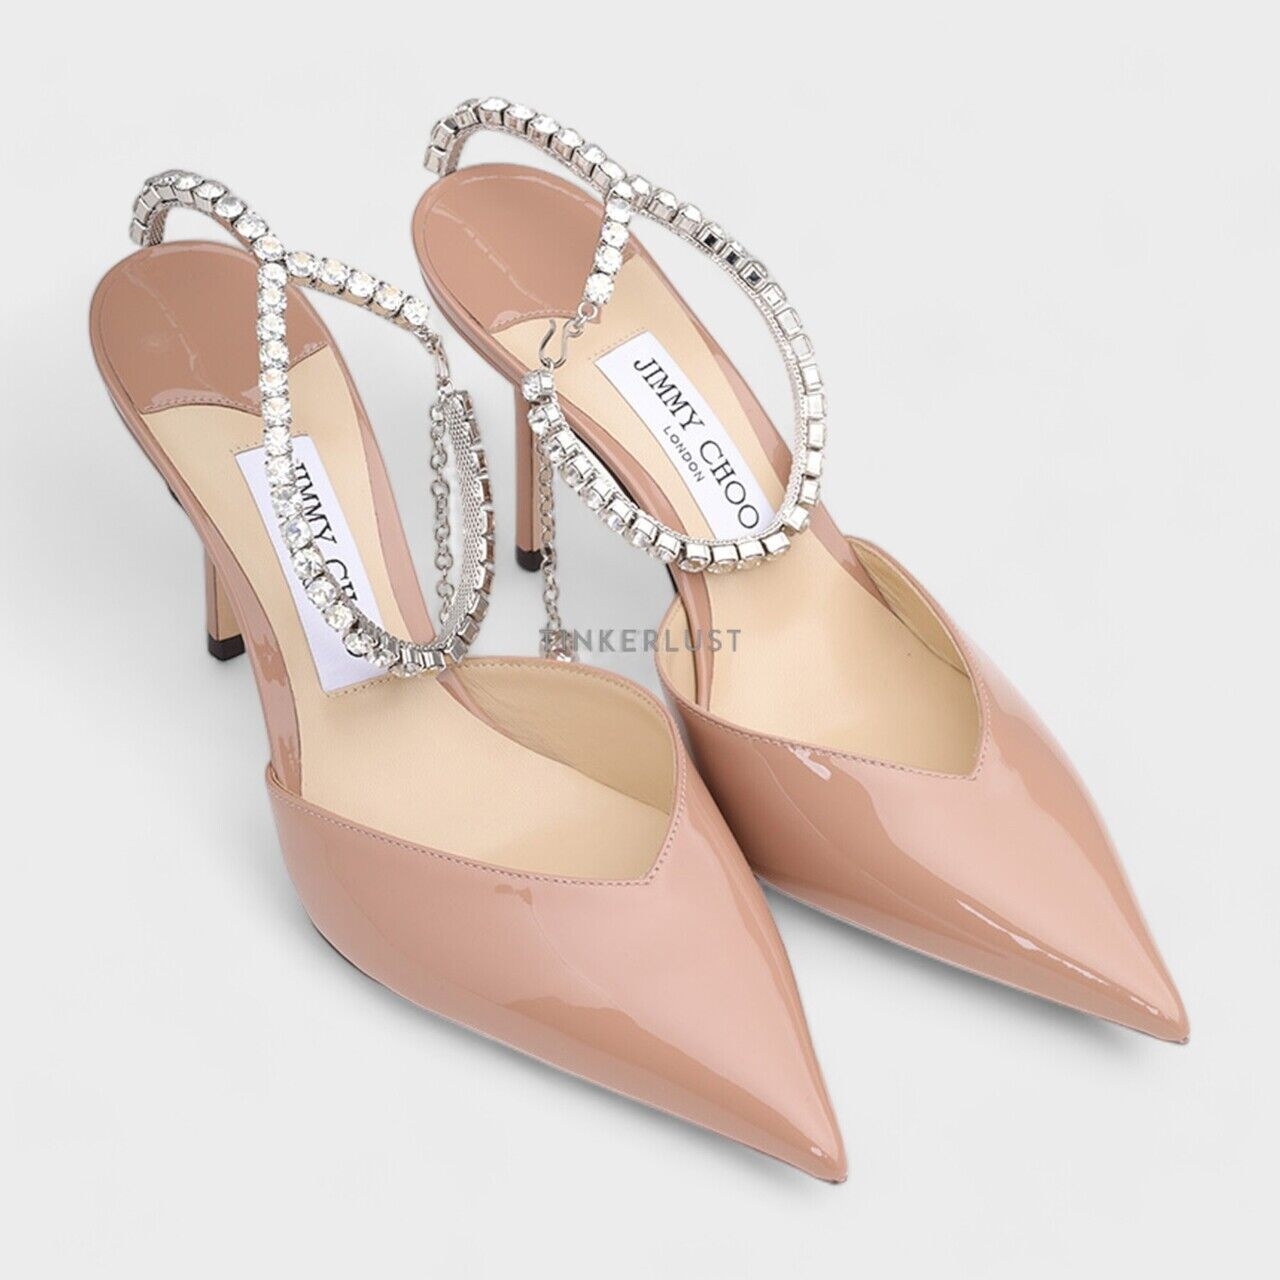 Jimmy Choo Saeda Ankle Crystal 85mm in Ballet Pink Patent Strap Heels